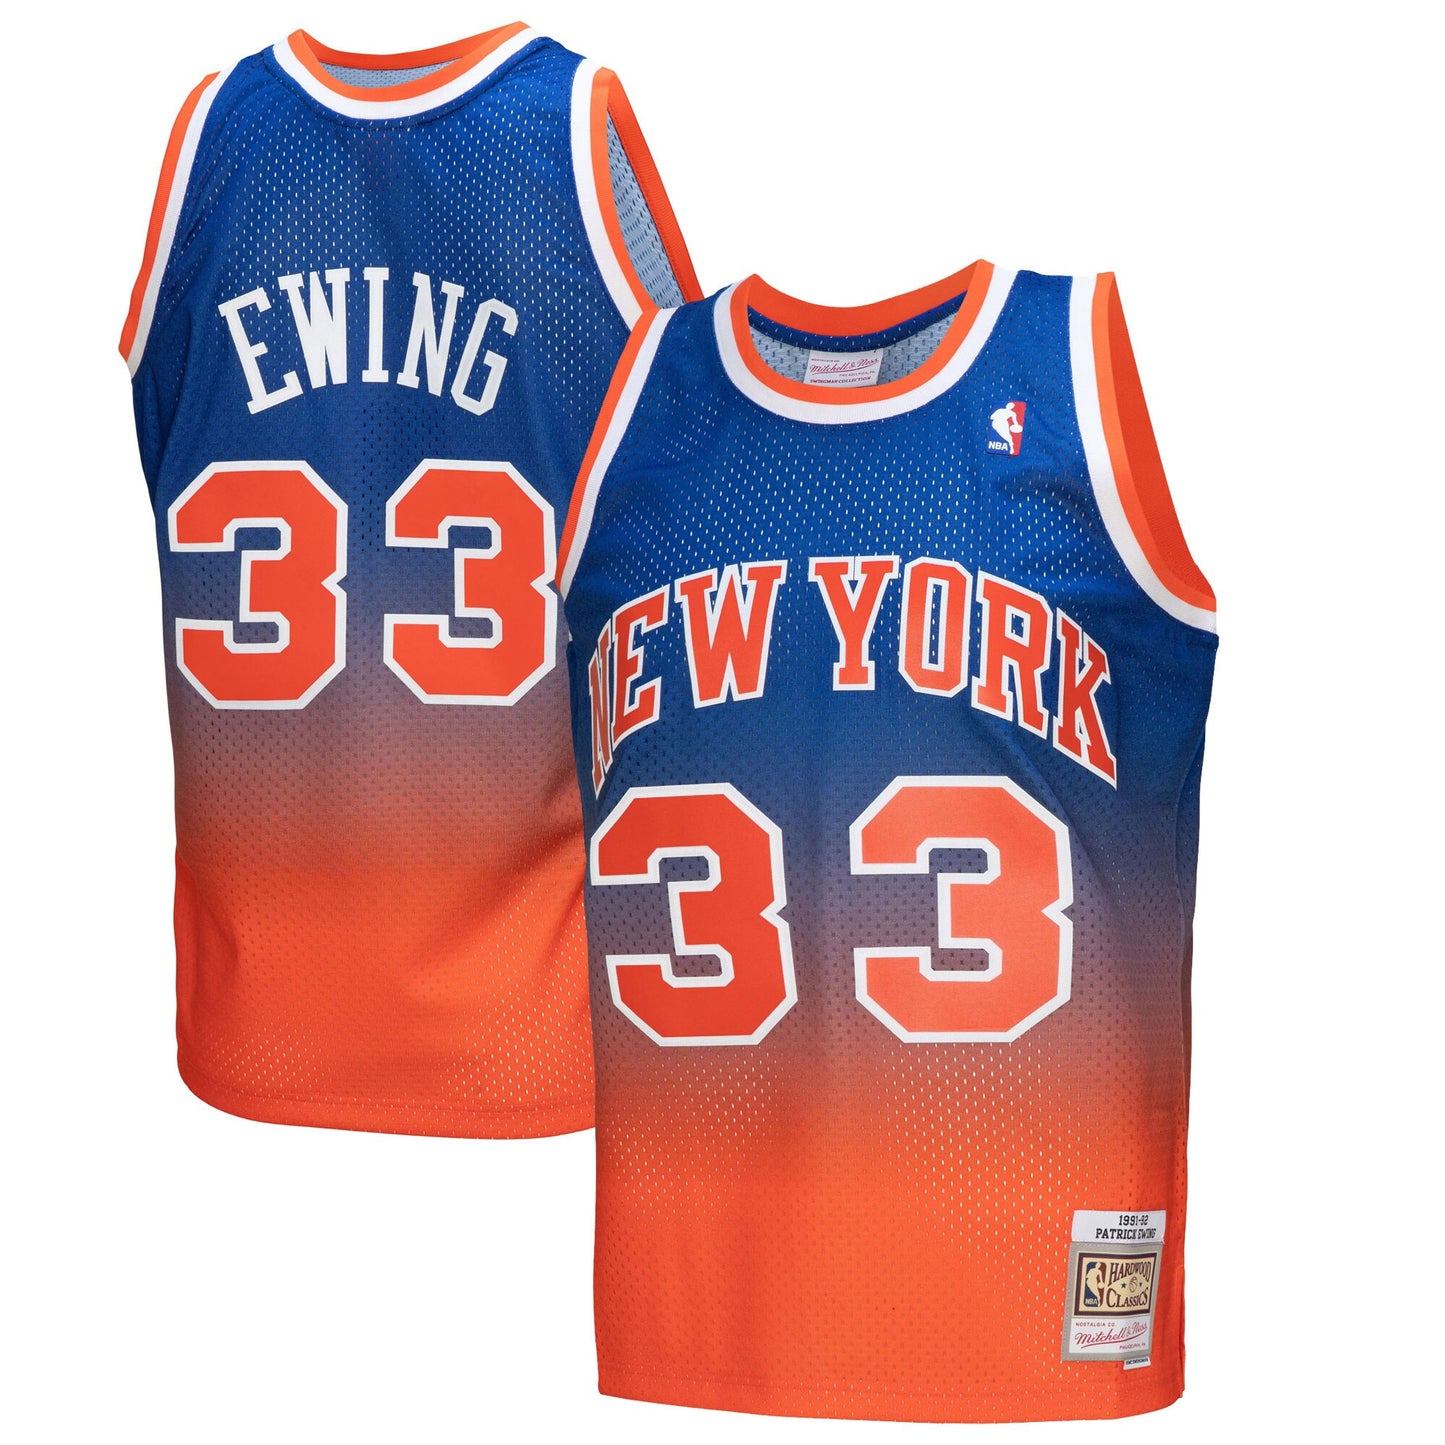 Patrick Ewing New York Knicks Mitchell & Ness 1991/92 Hardwood Classics Fadeaway Swingman Player Jersey - Orange/Royal